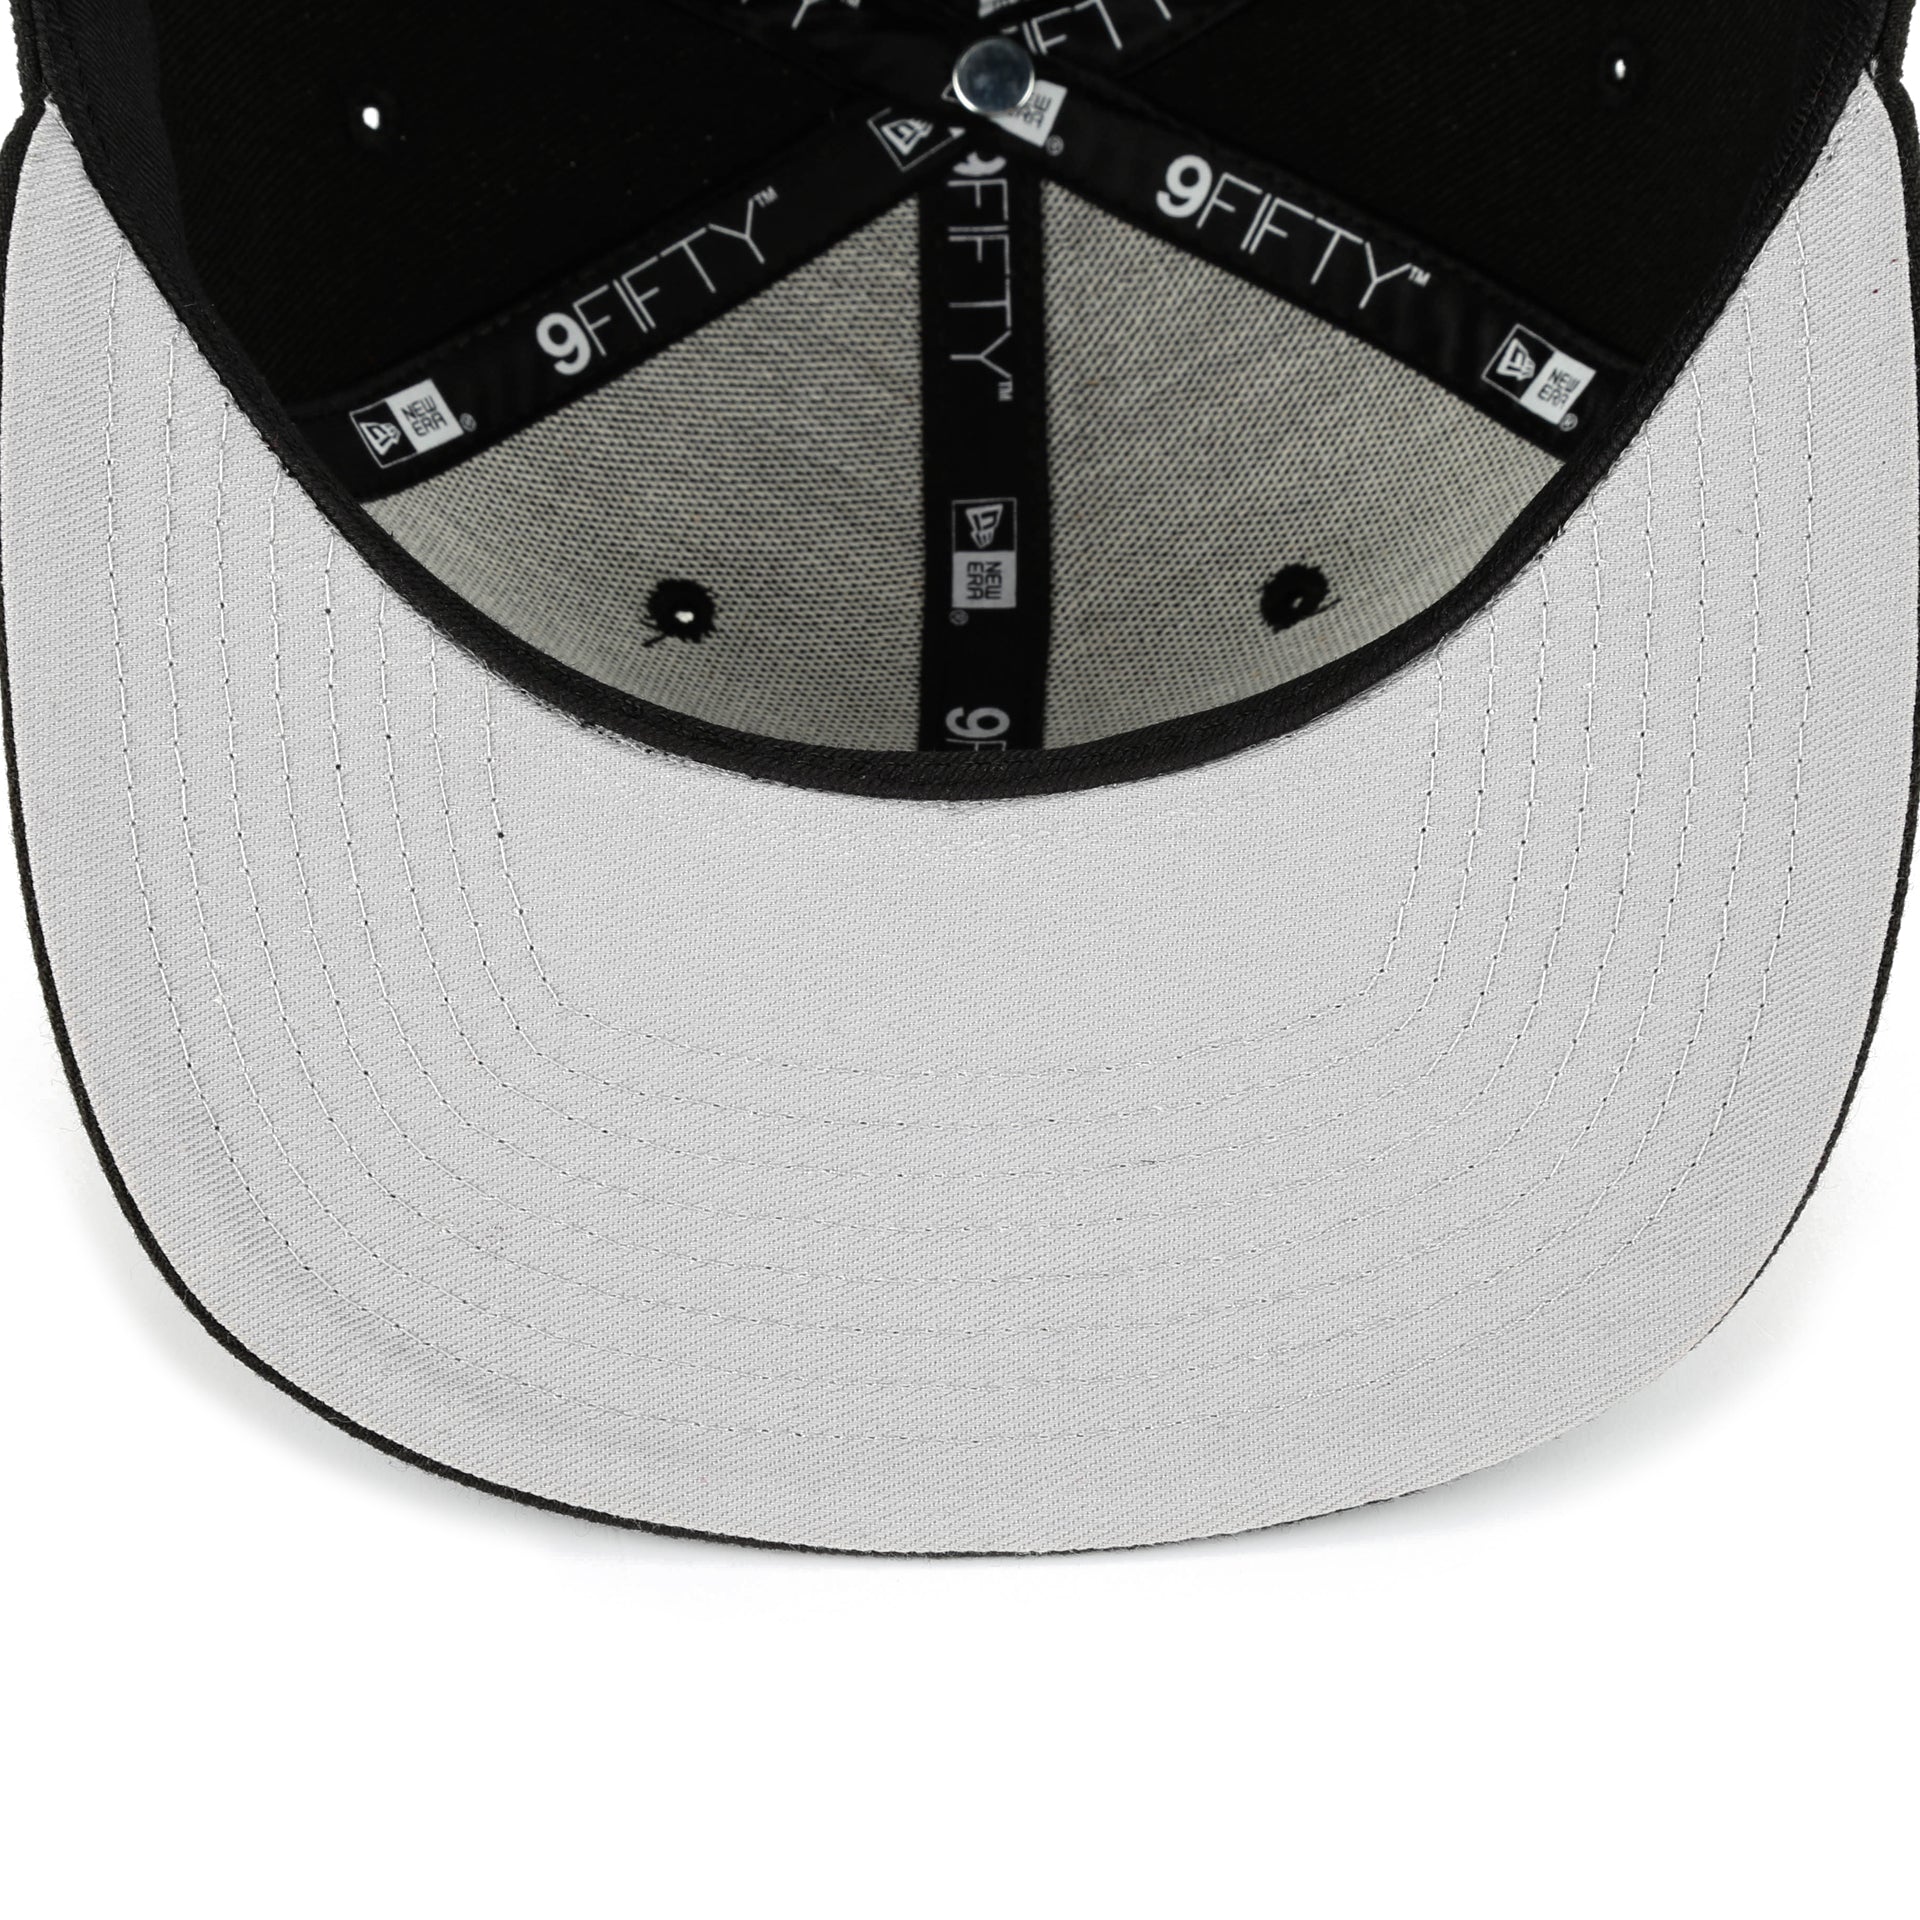 New Era Men's Navy, White Detroit Tigers Base Trucker 9FIFTY Snapback Hat